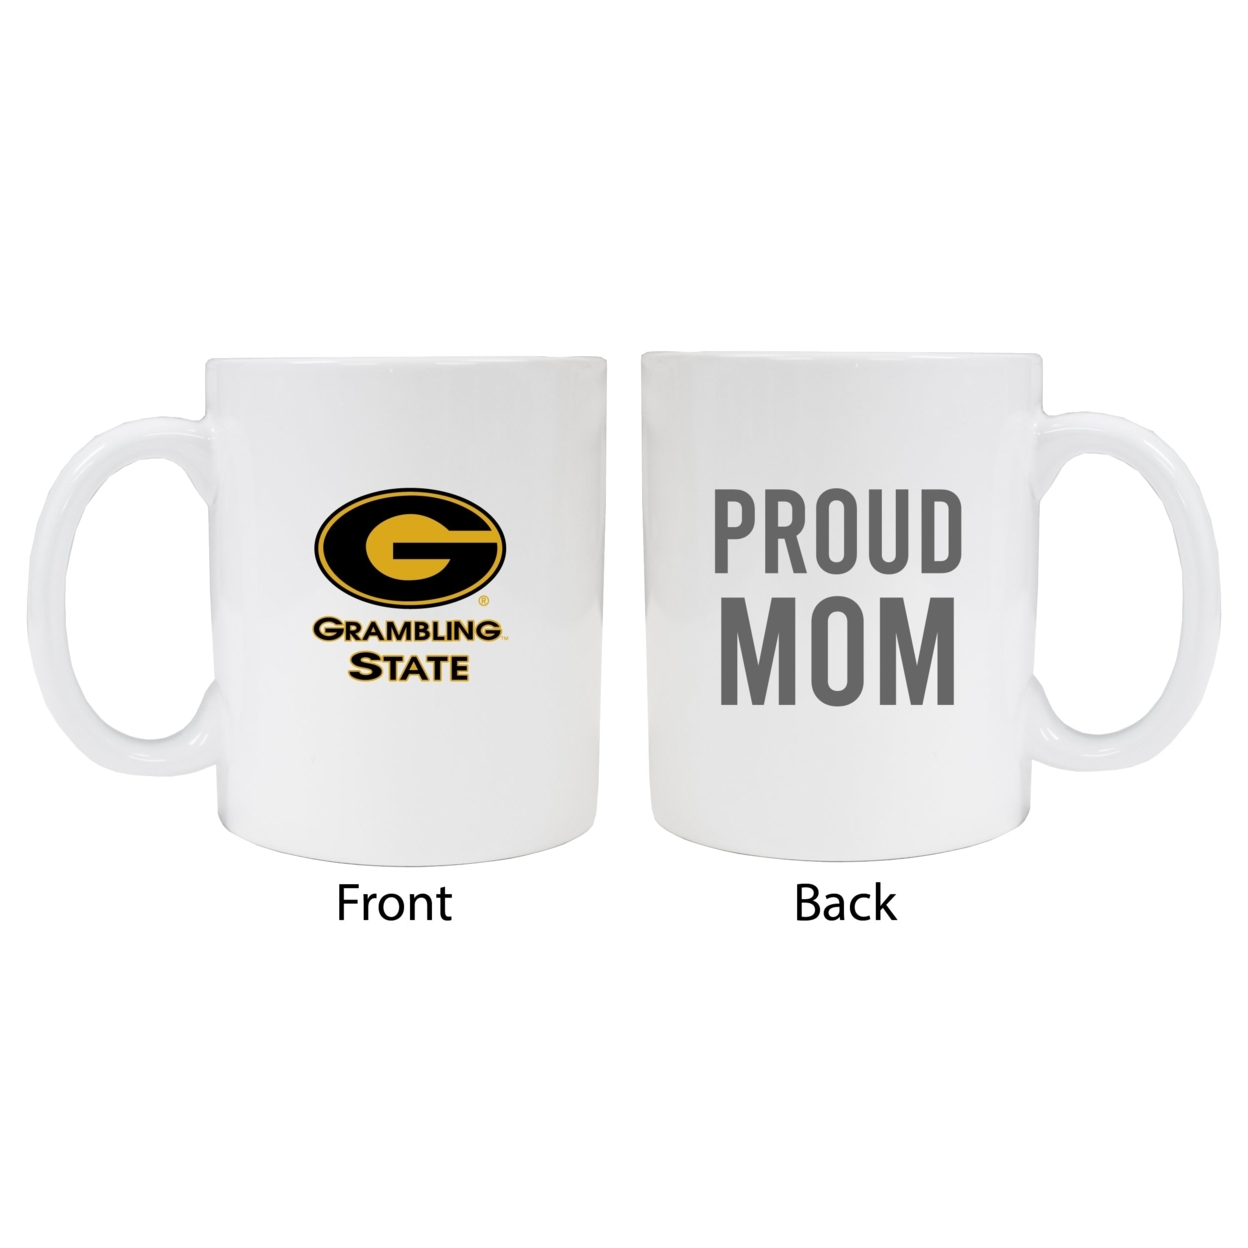 Grambling State Tigers Proud Mom Ceramic Coffee Mug - White (2 Pack)